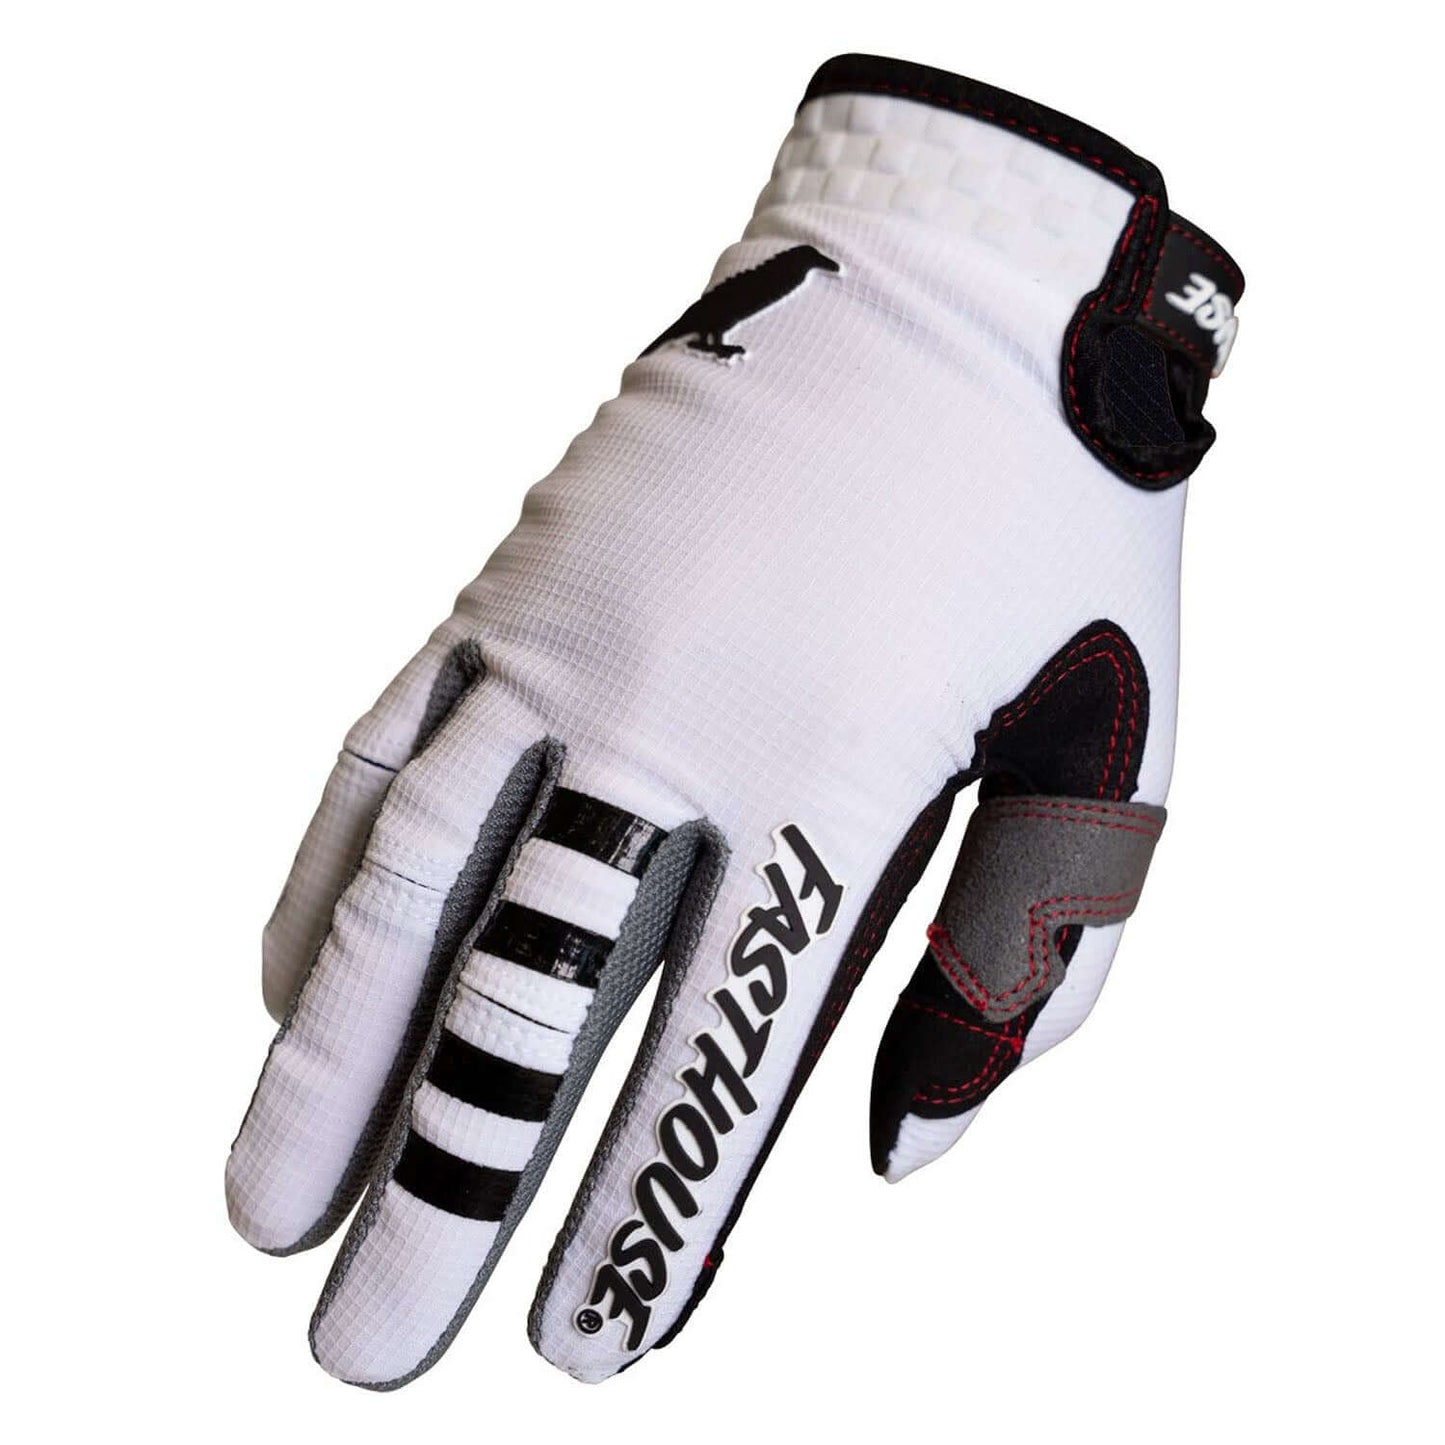 Fasthouse Elrod Air Glove White Bike Gloves